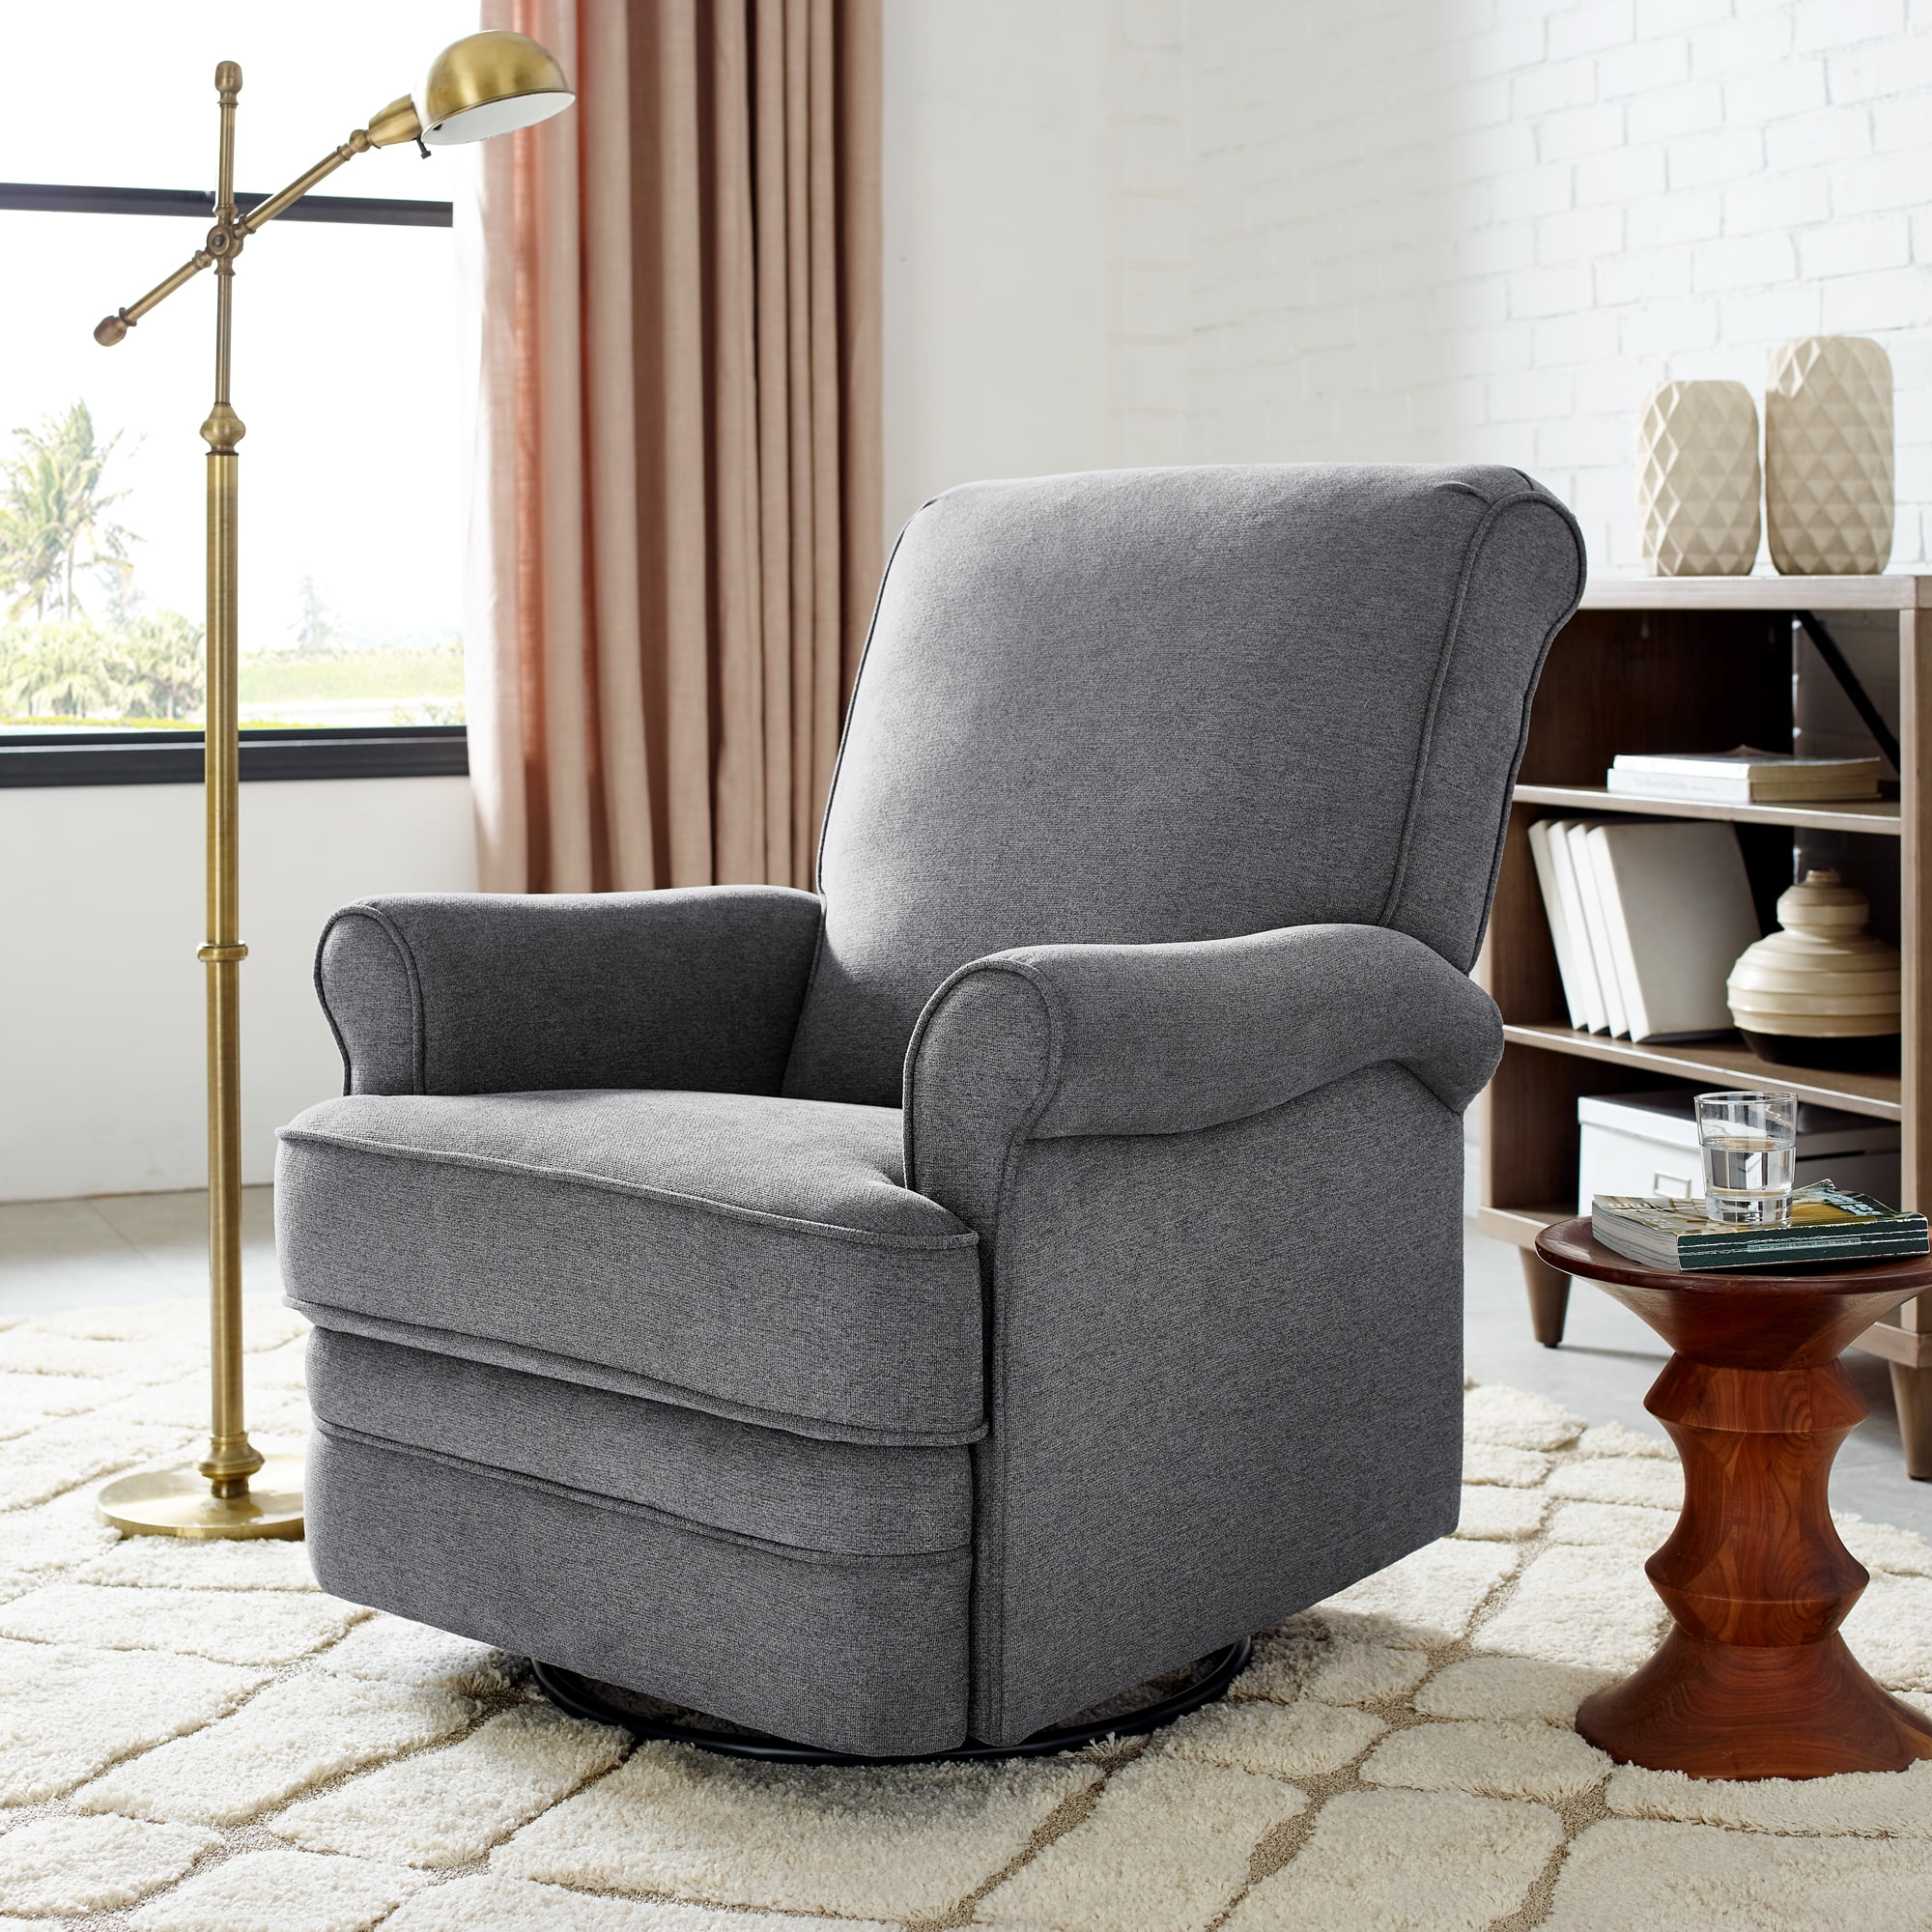 Modern Essentials Bella Upholstered Glider Swivel Rocker Chair, Gray